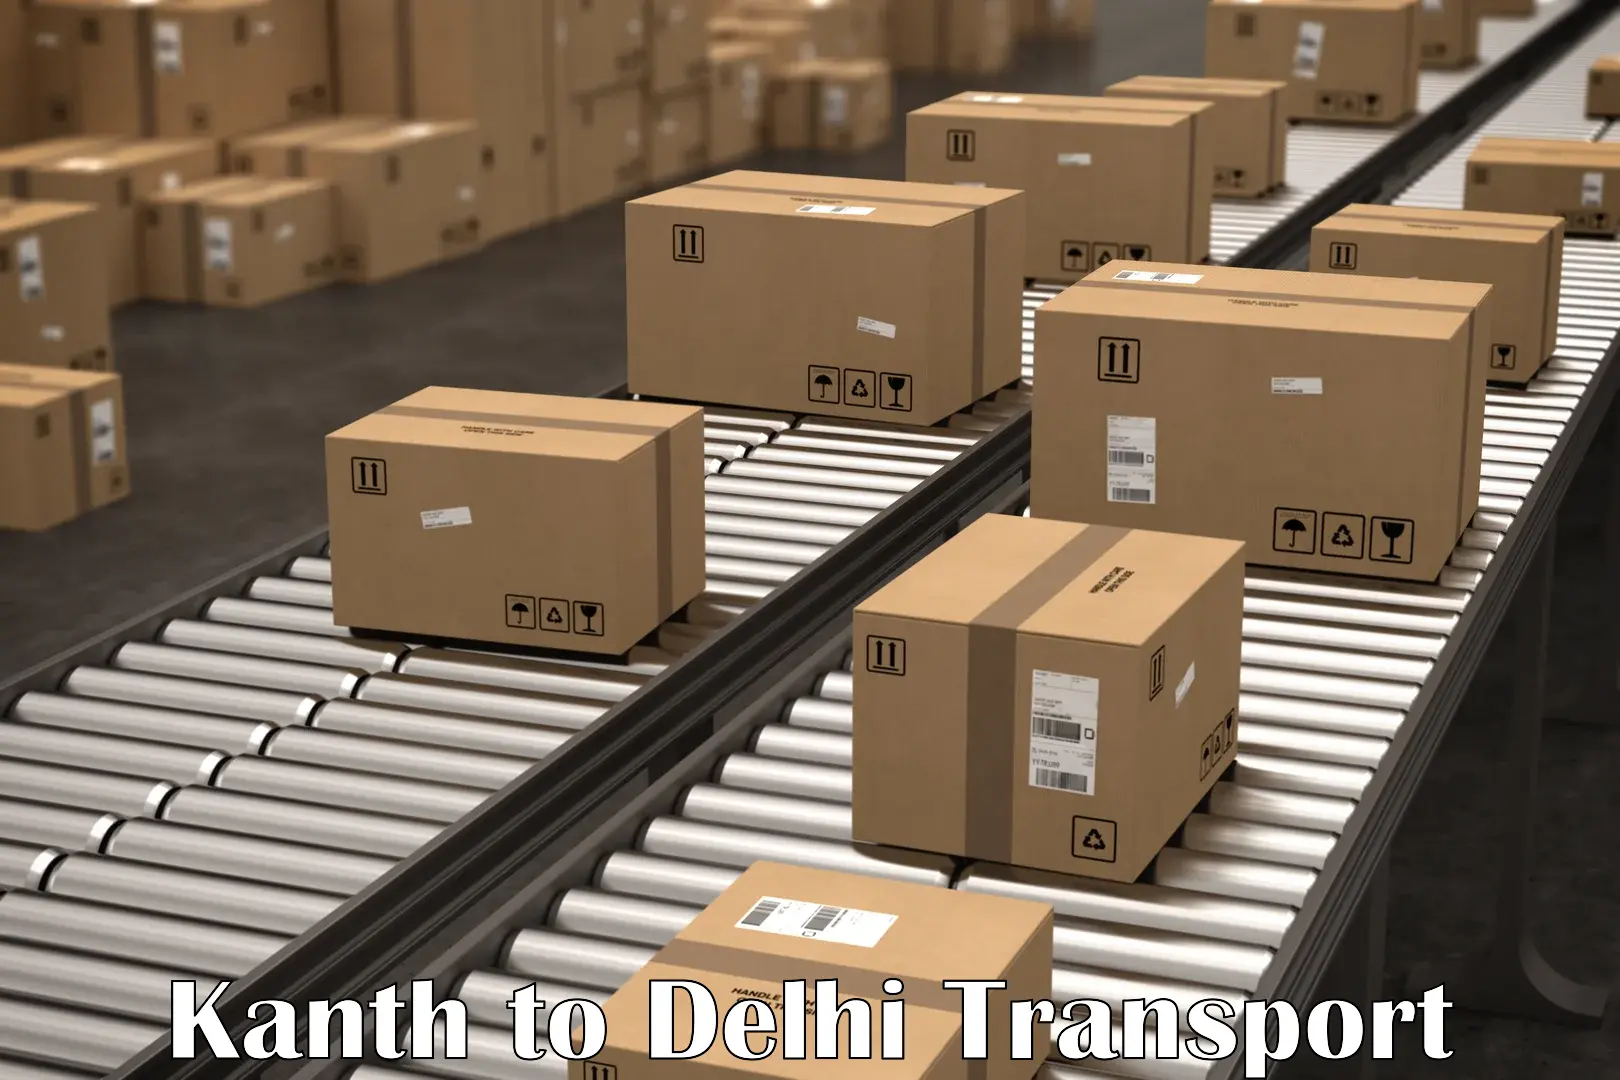 Shipping partner Kanth to Delhi